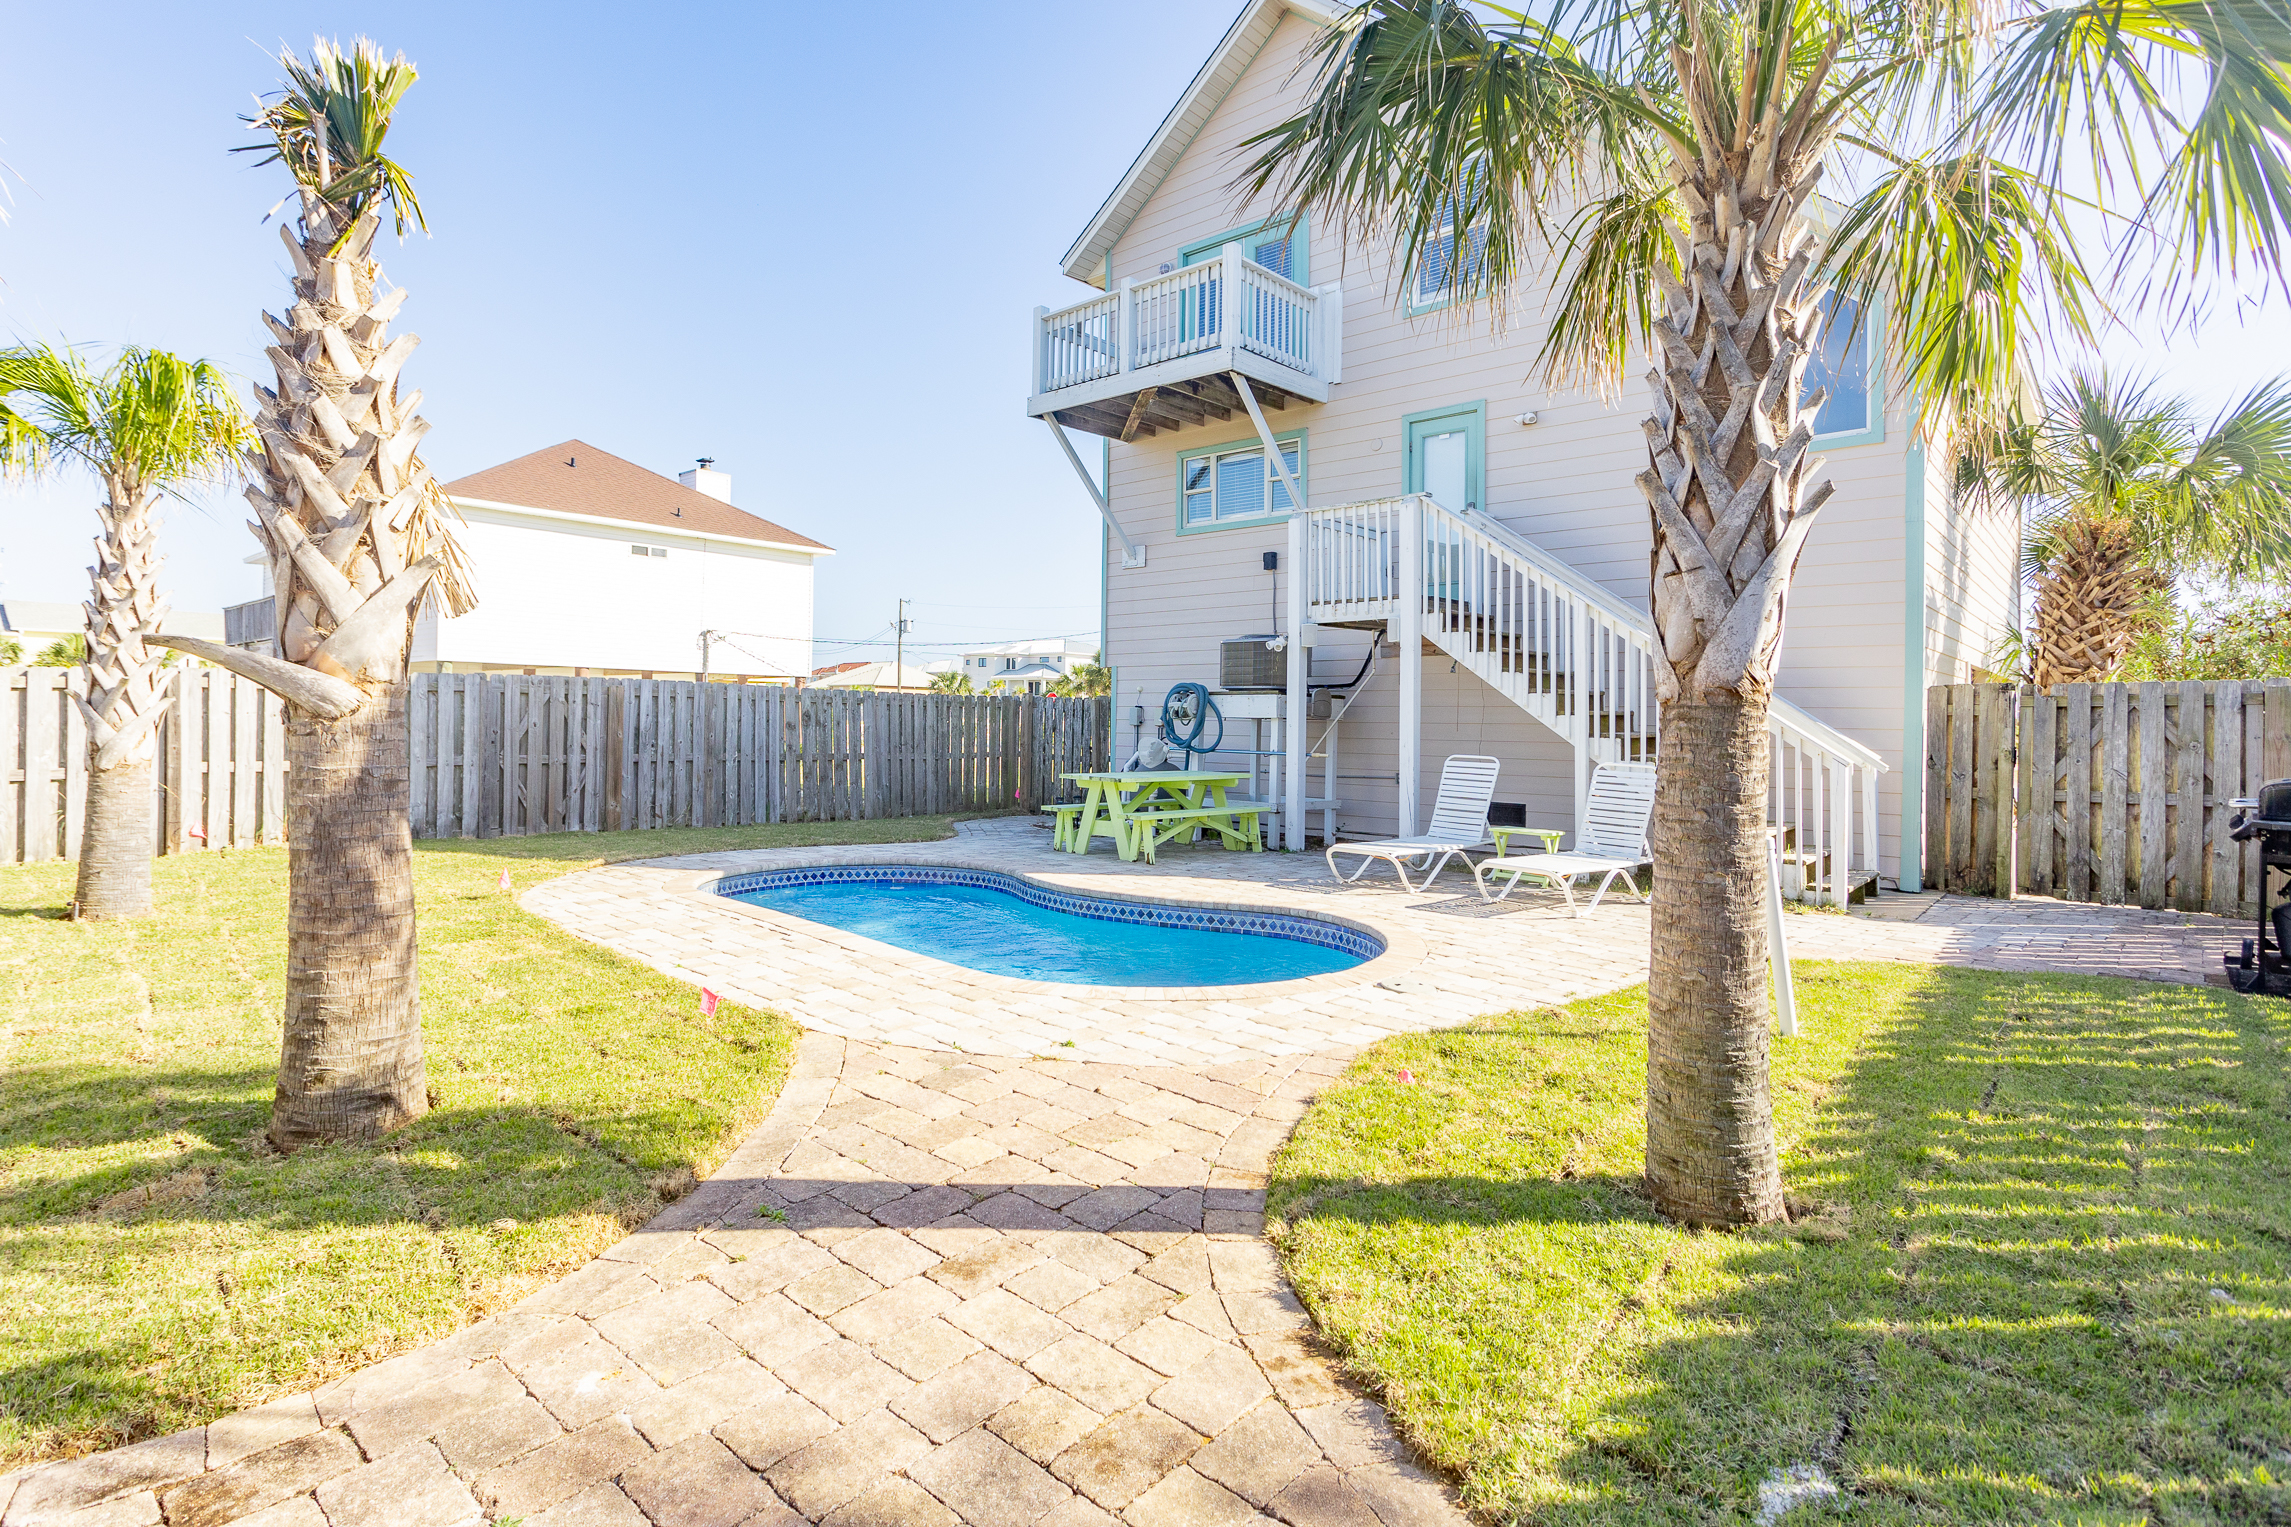 Maldonado 813 - The Lazee Lagoon Beach House House / Cottage rental in Pensacola Beach House Rentals in Pensacola Beach Florida - #11